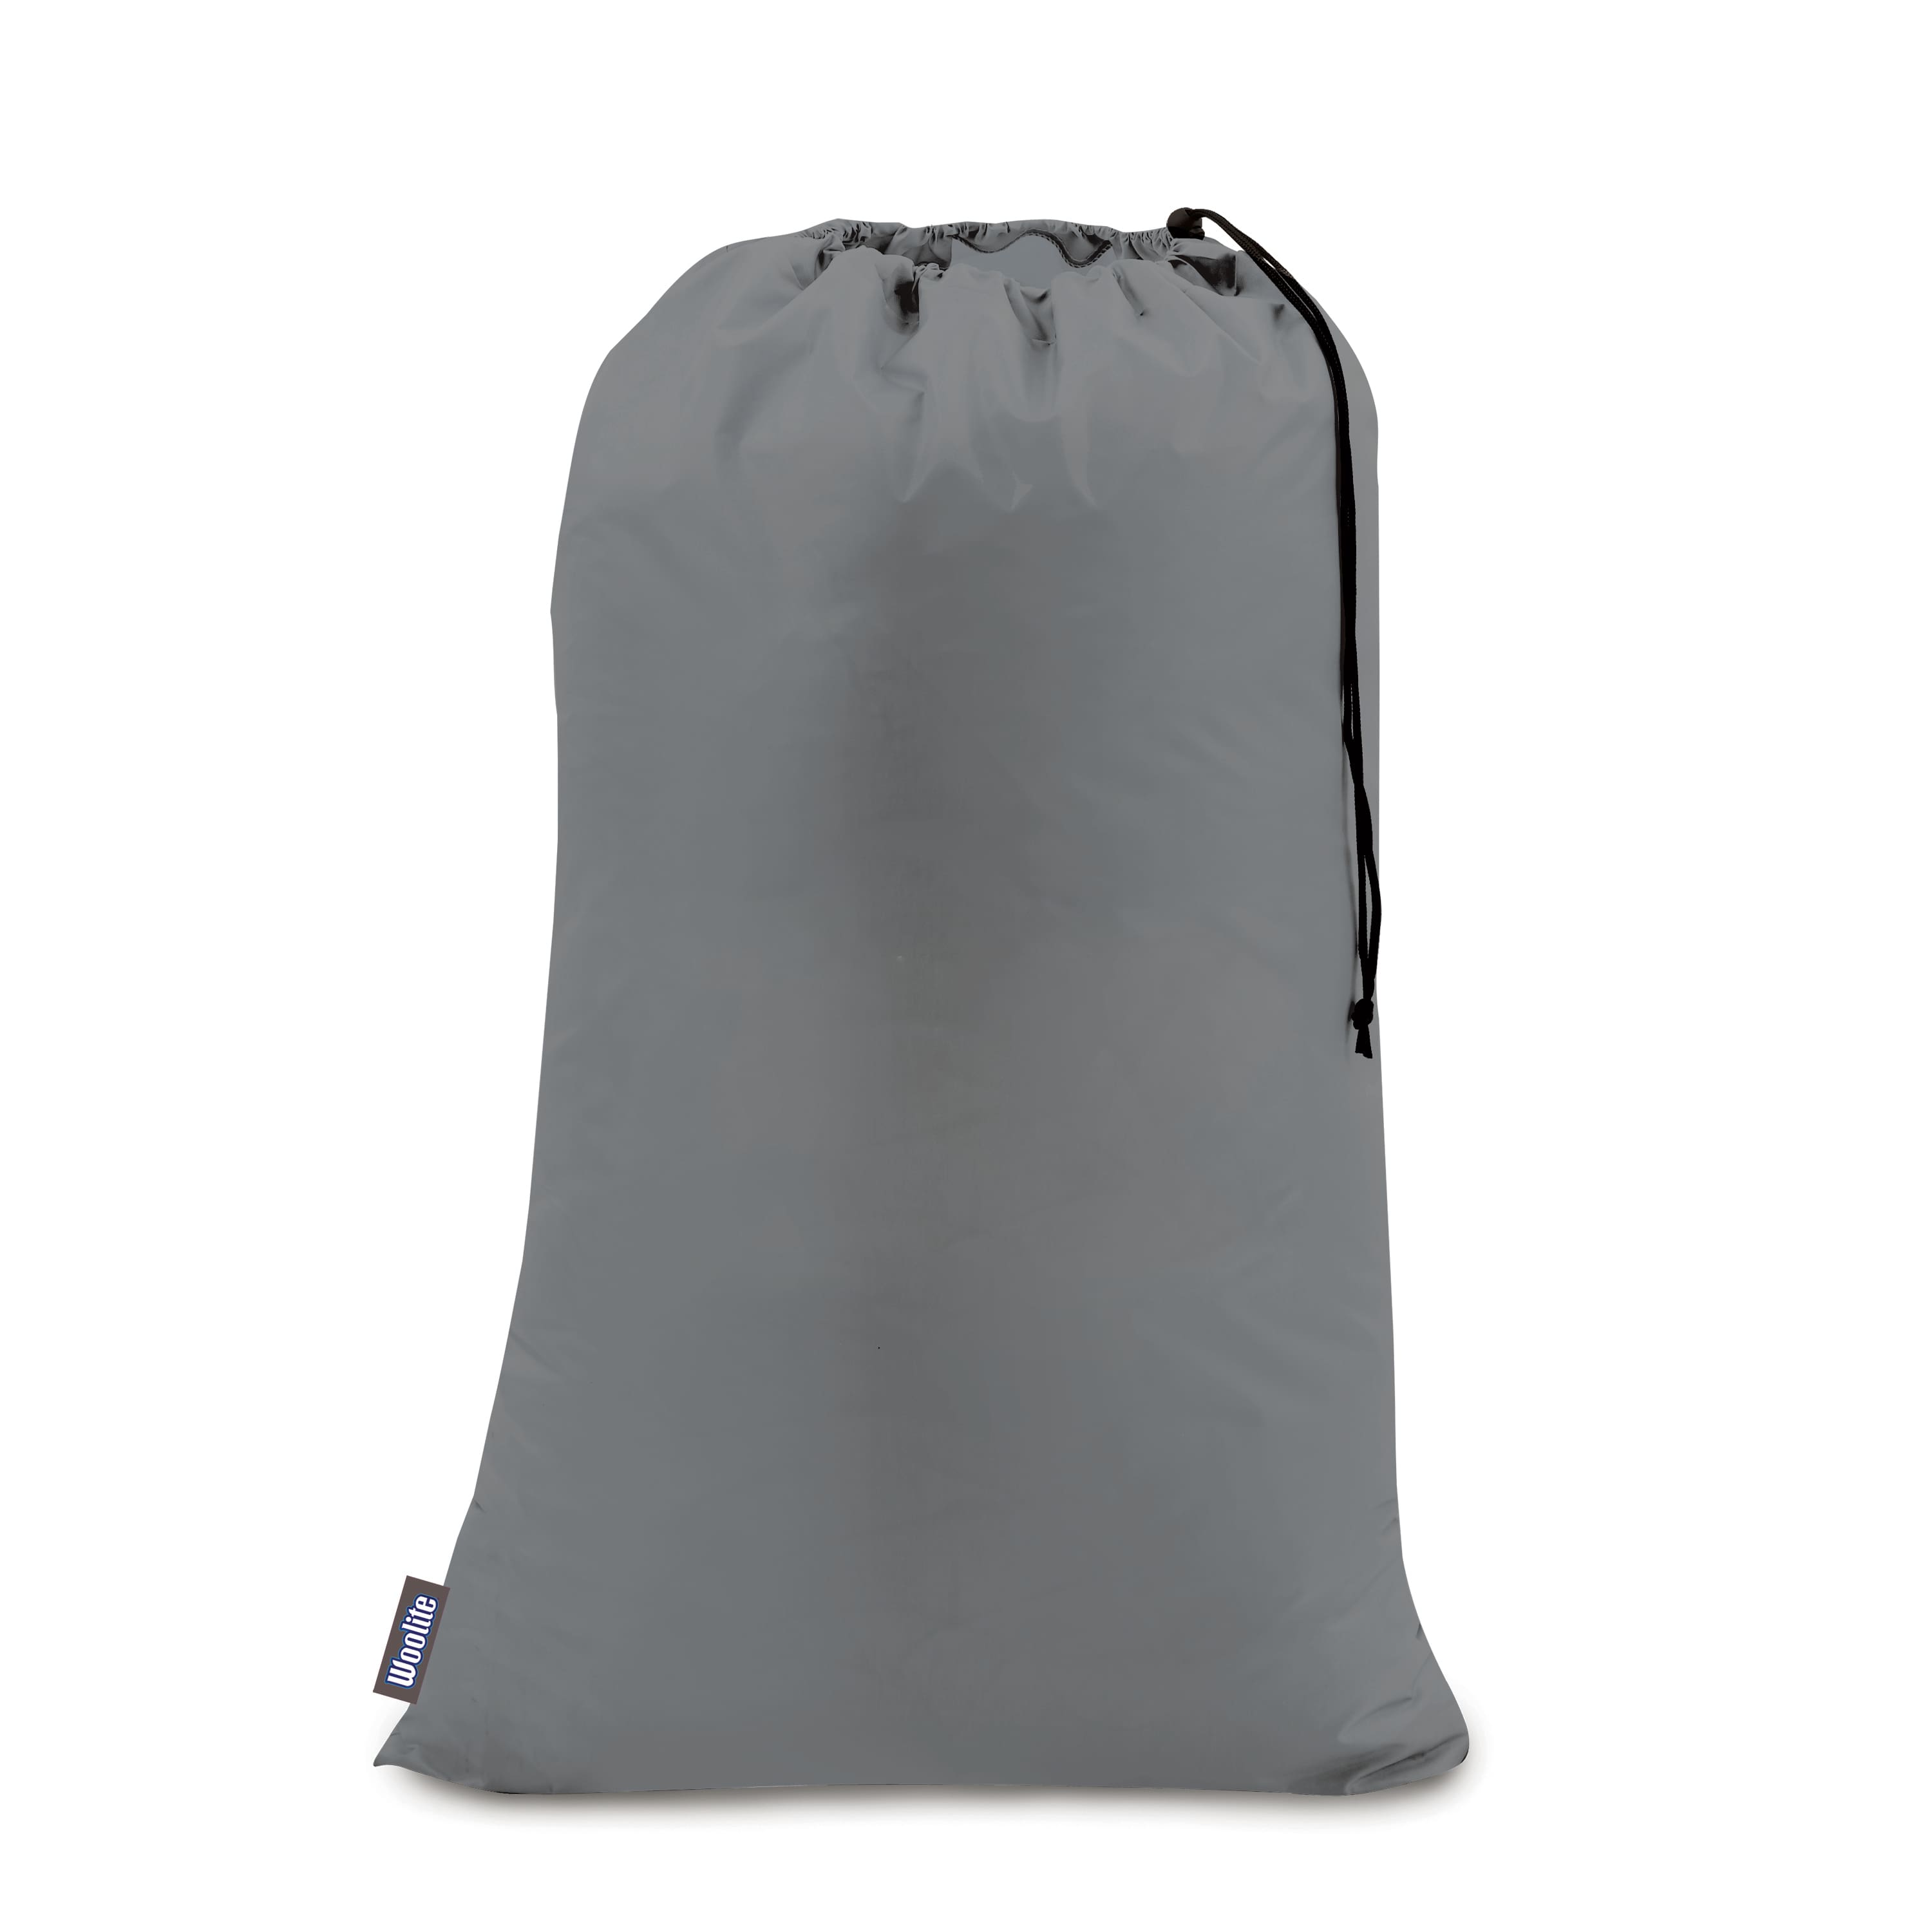 Woolite Gray Sanitized Laundry Bag